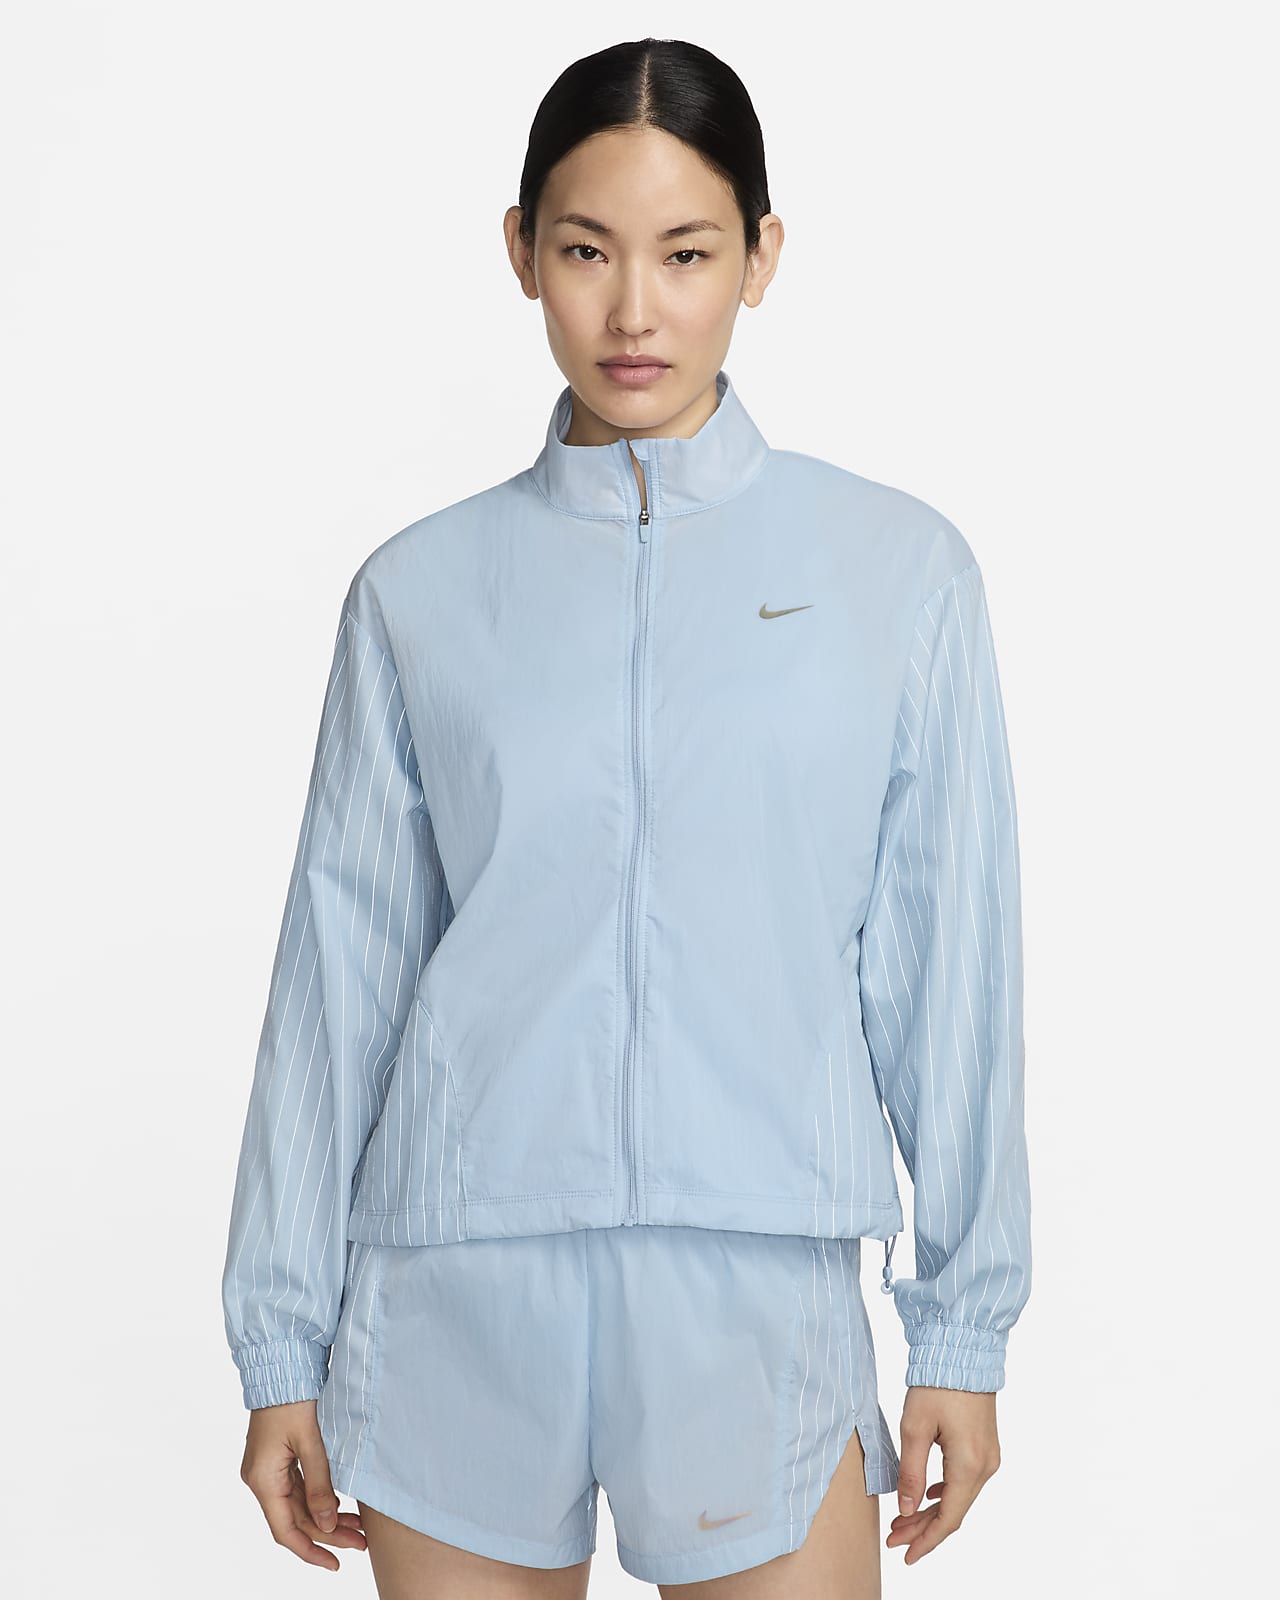 Nike Running Division Women's Running Jacket